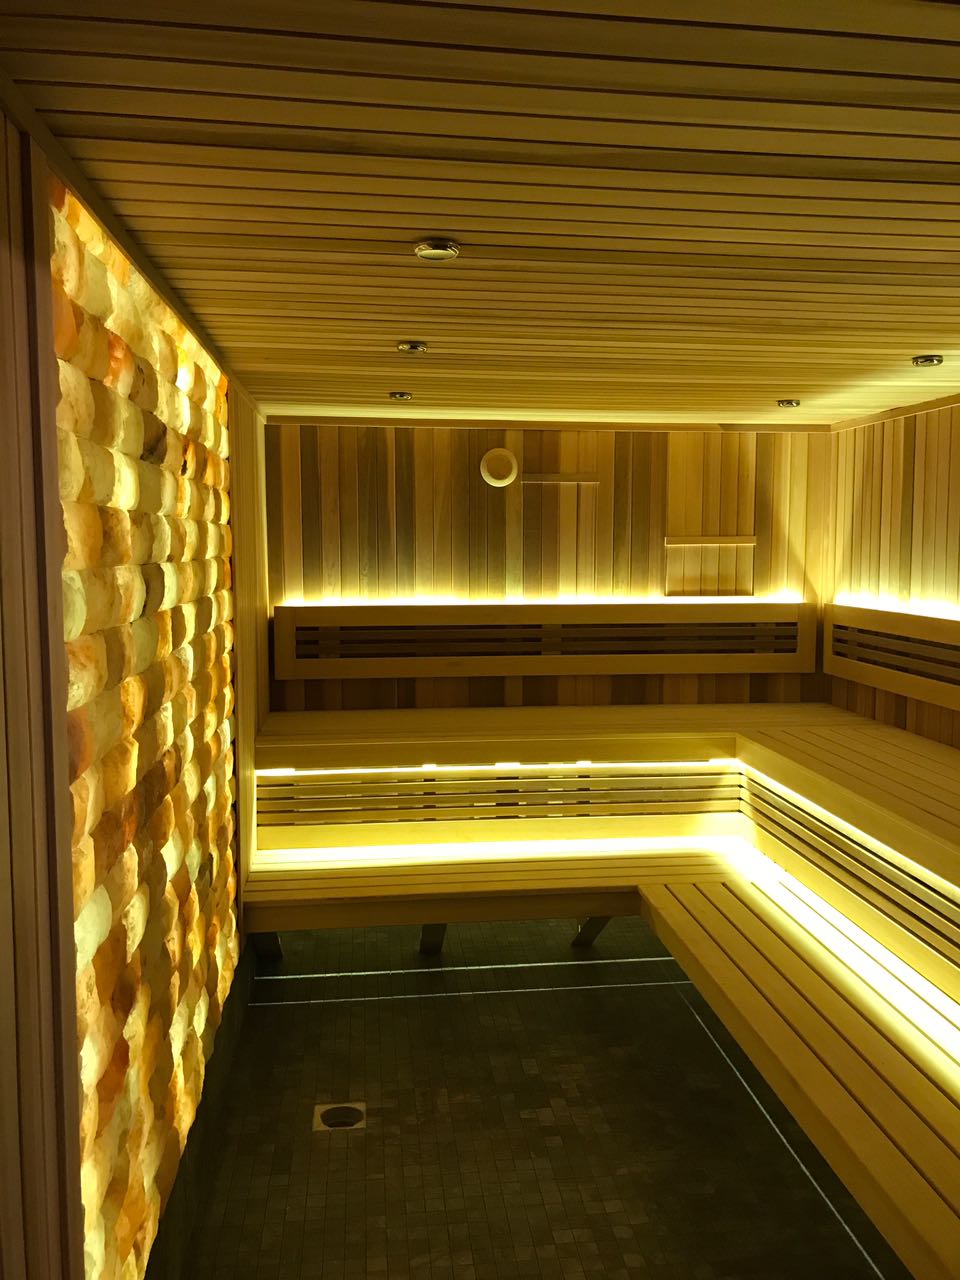 3D-Sauna.ru - наши работы